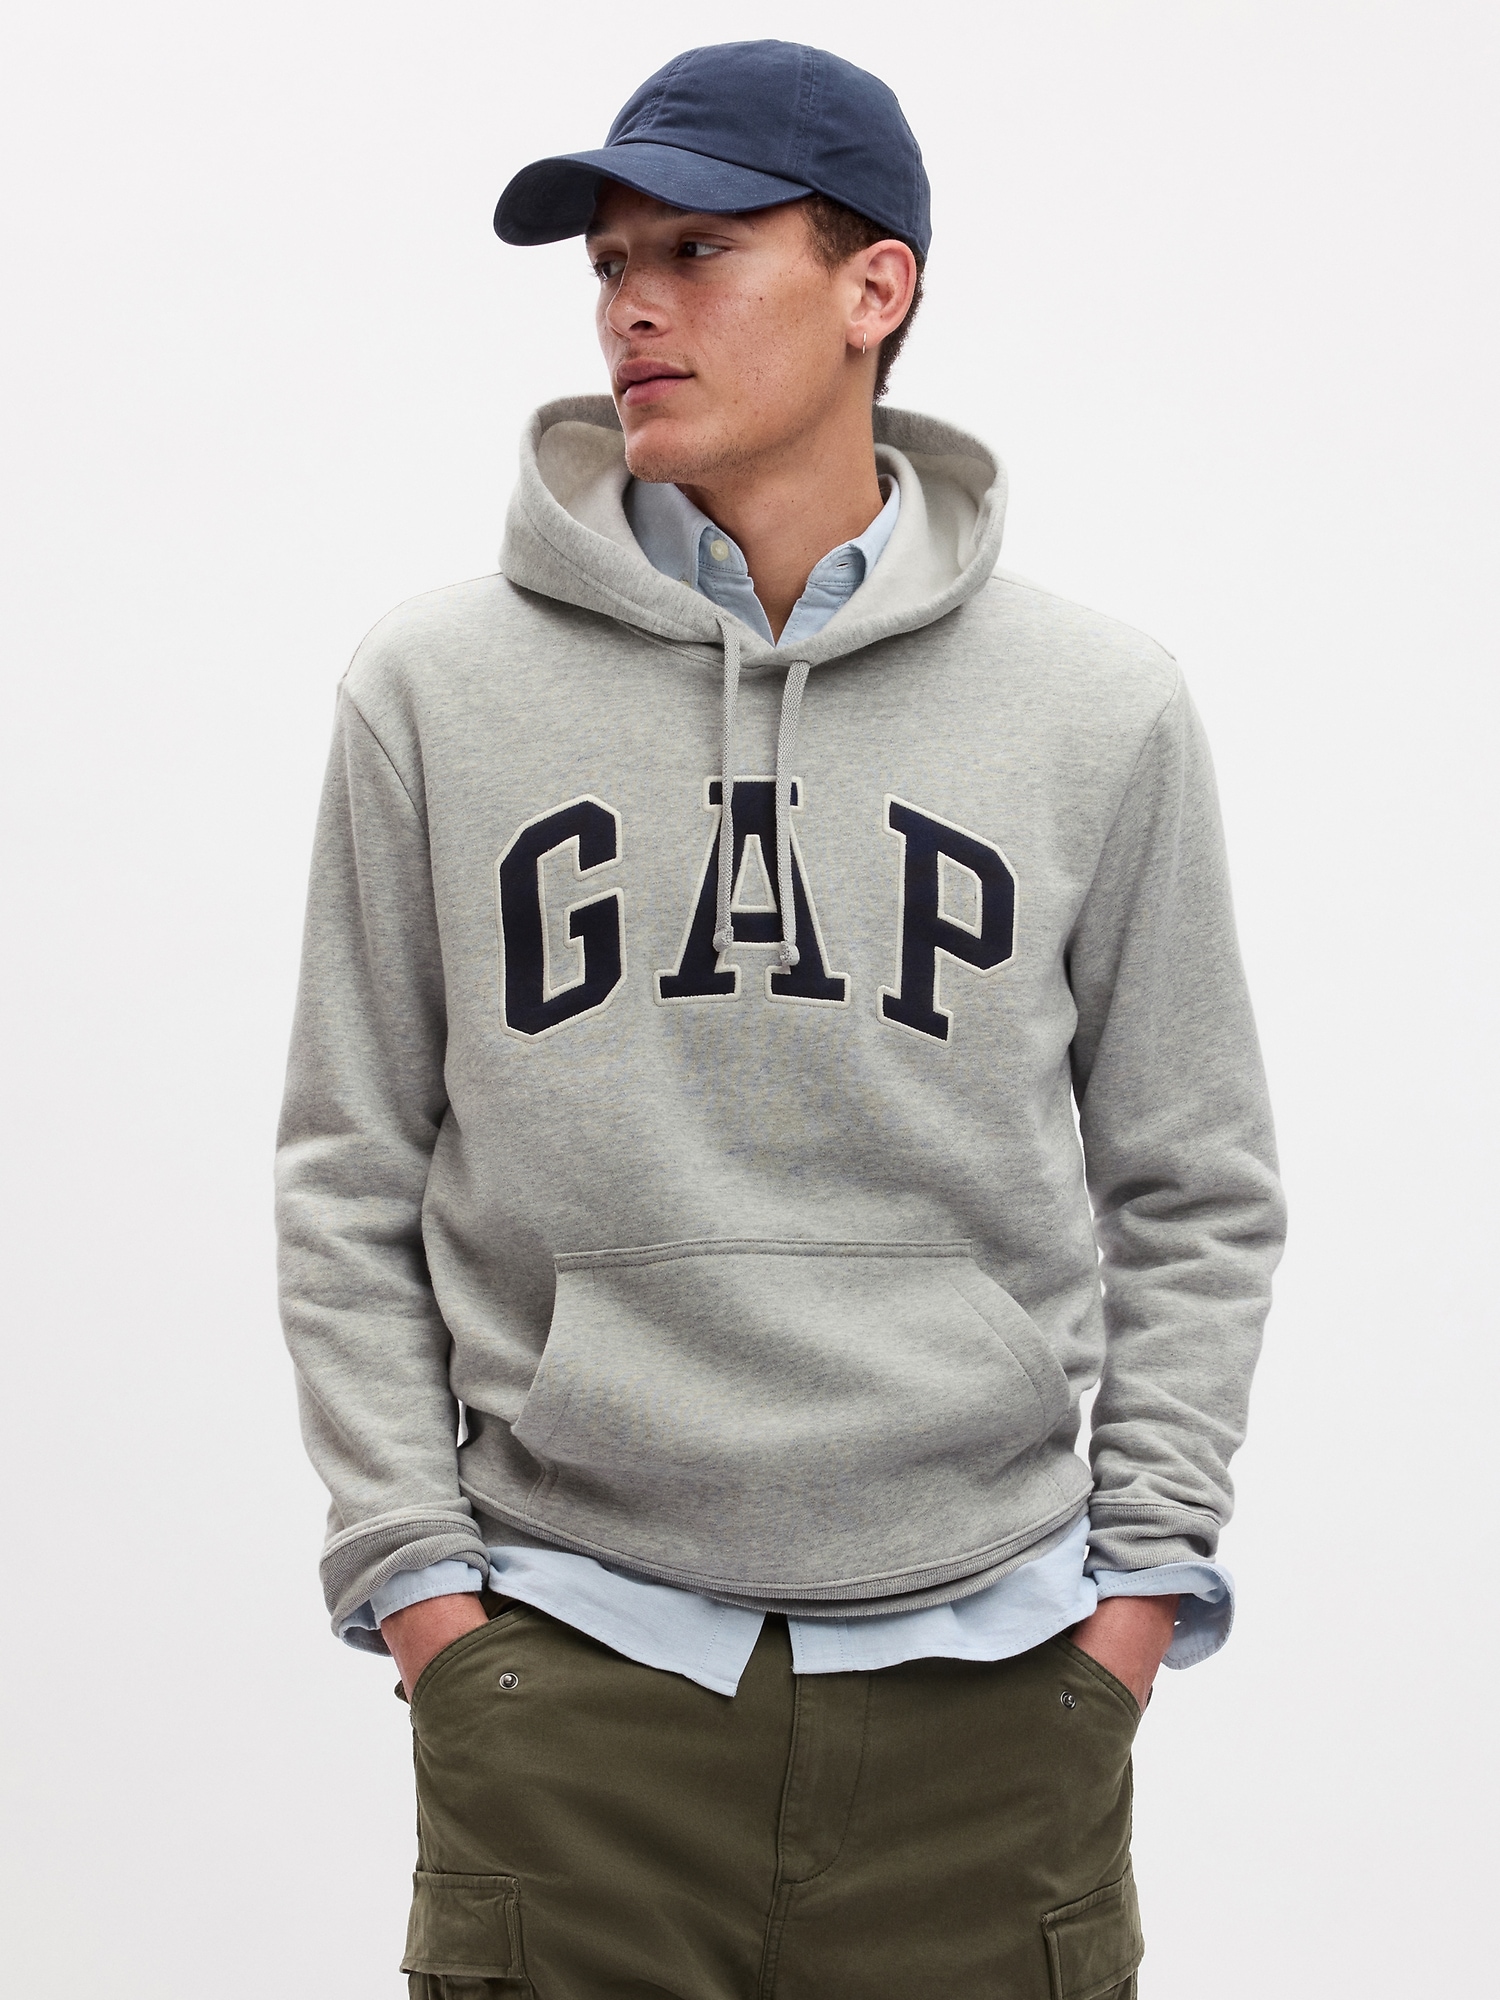 Men's Vintage Soft Zip Hoodie by Gap Tapestry Navy Blue Size Xs